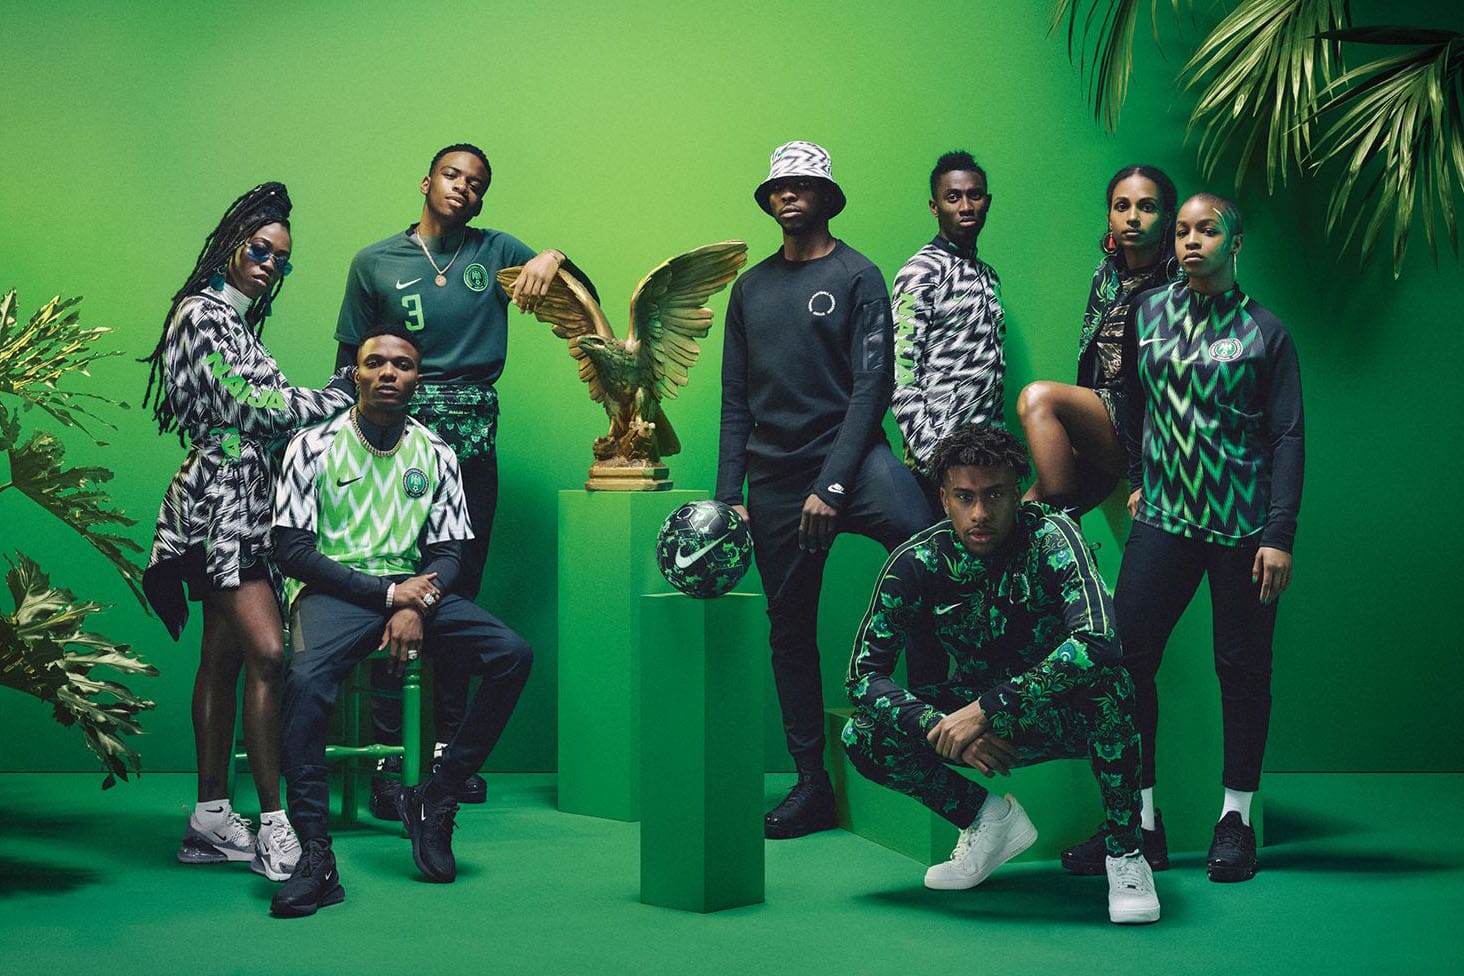 nigeria world cup shirt